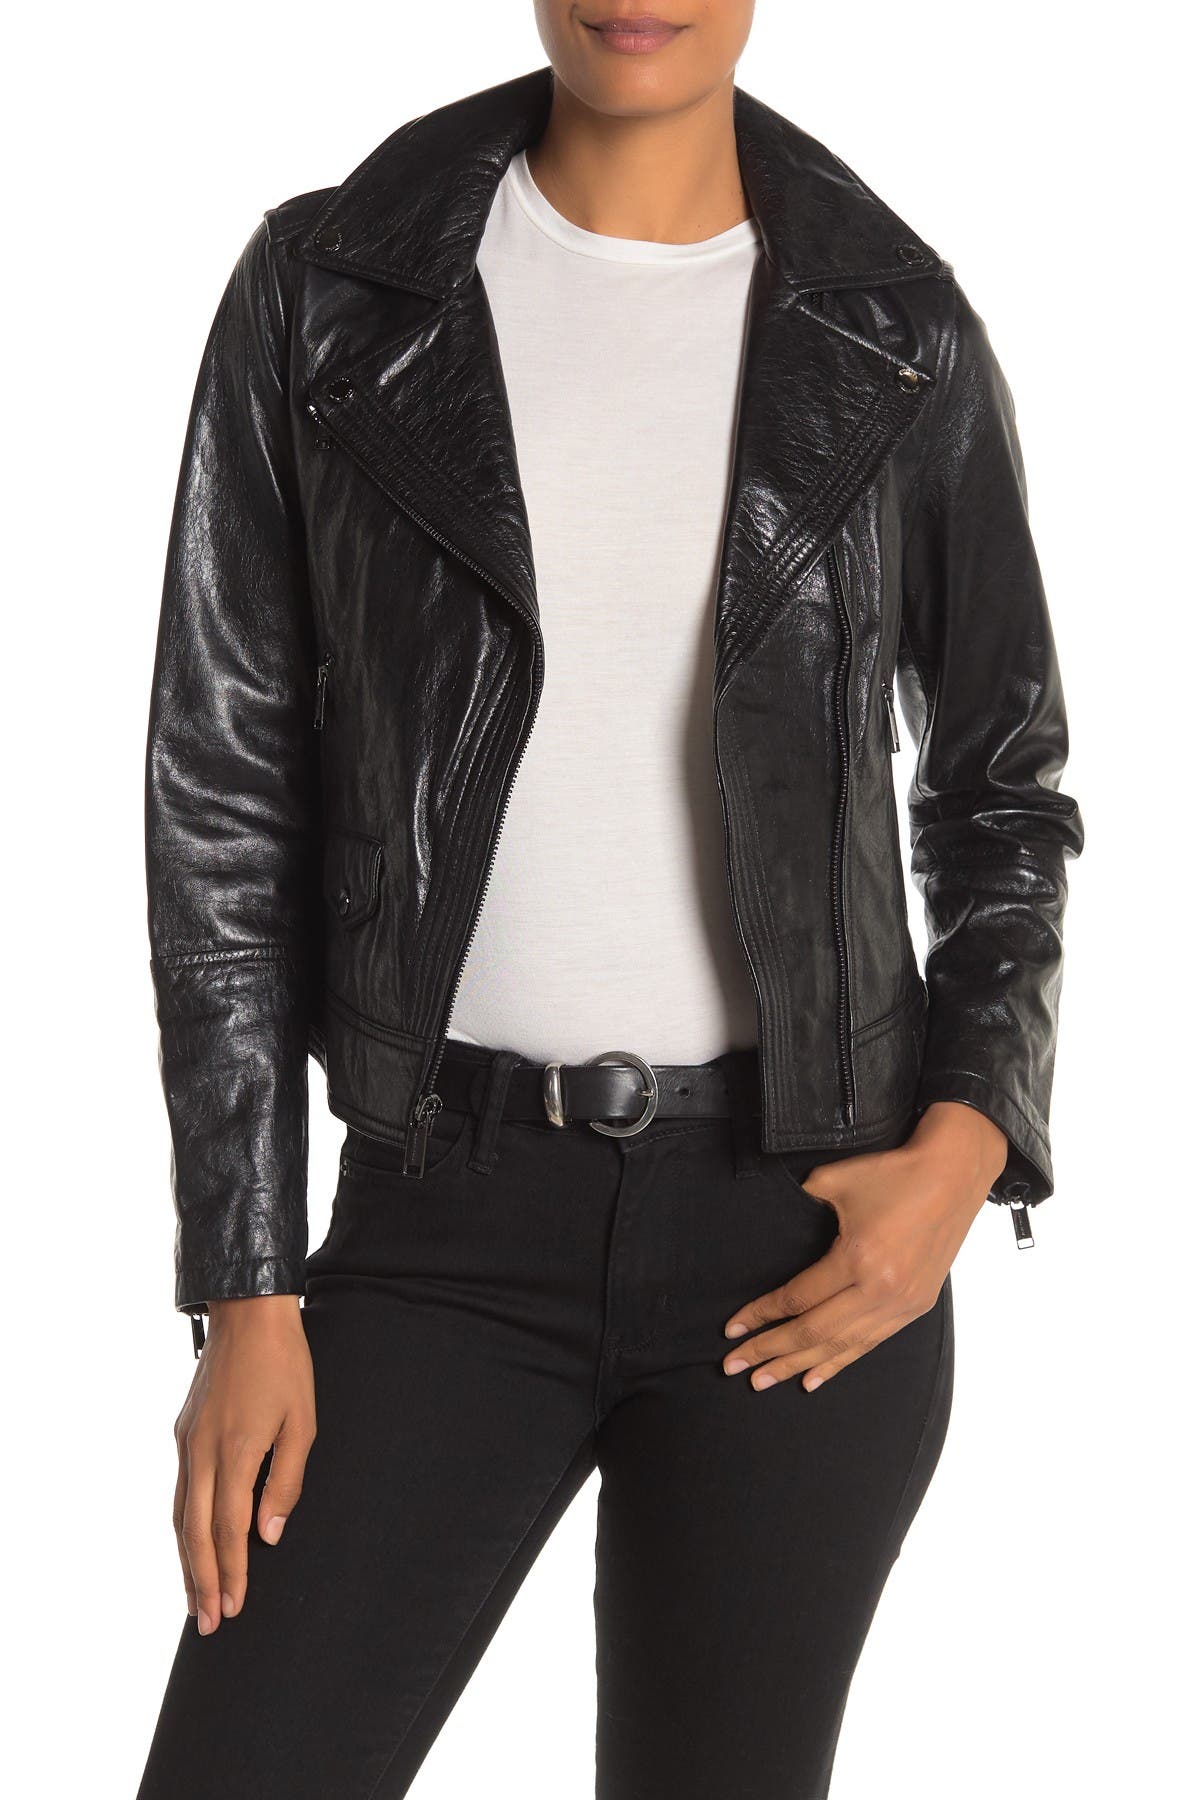 michael kors moto leather jacket